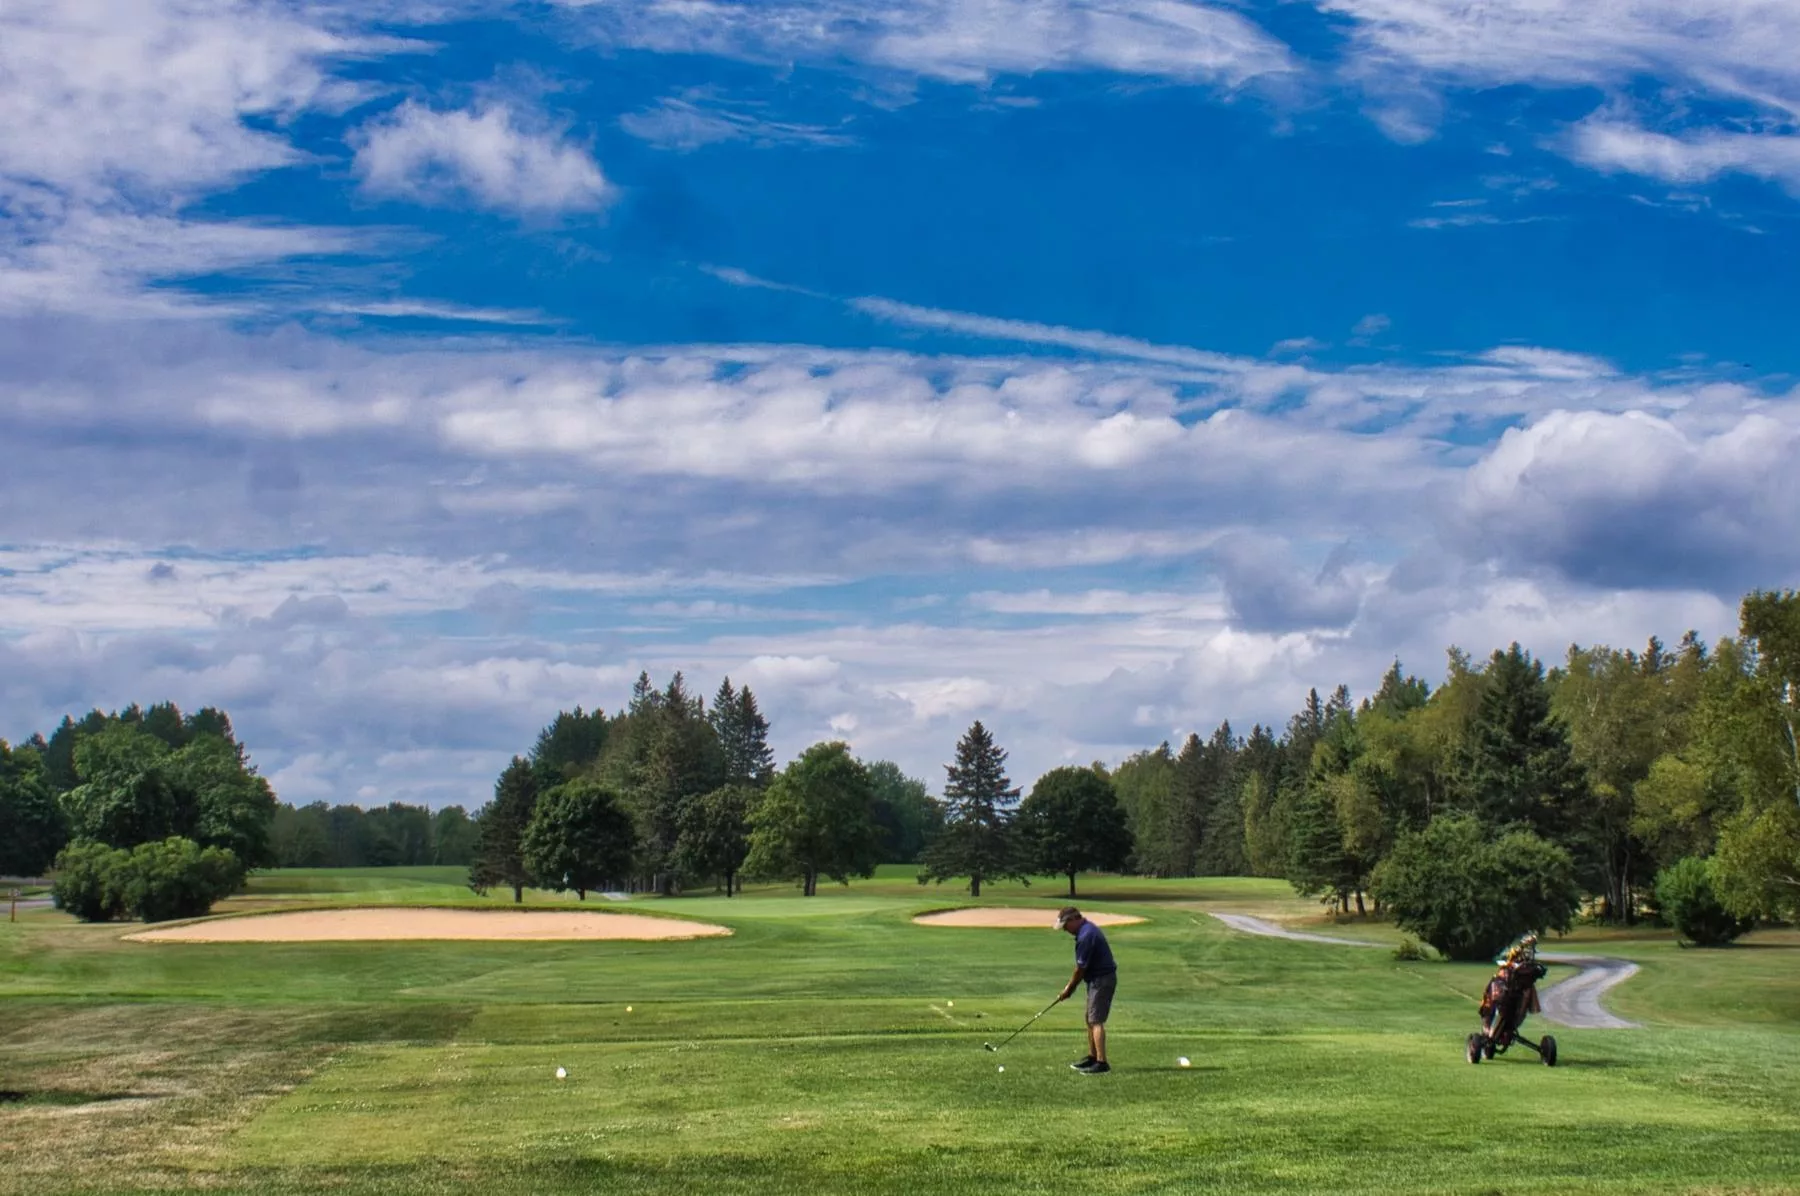 File:Canada new brunswick jon pedersen july 2020 - mactaquac golf 2.jpg - Image of Golf tourism, A p